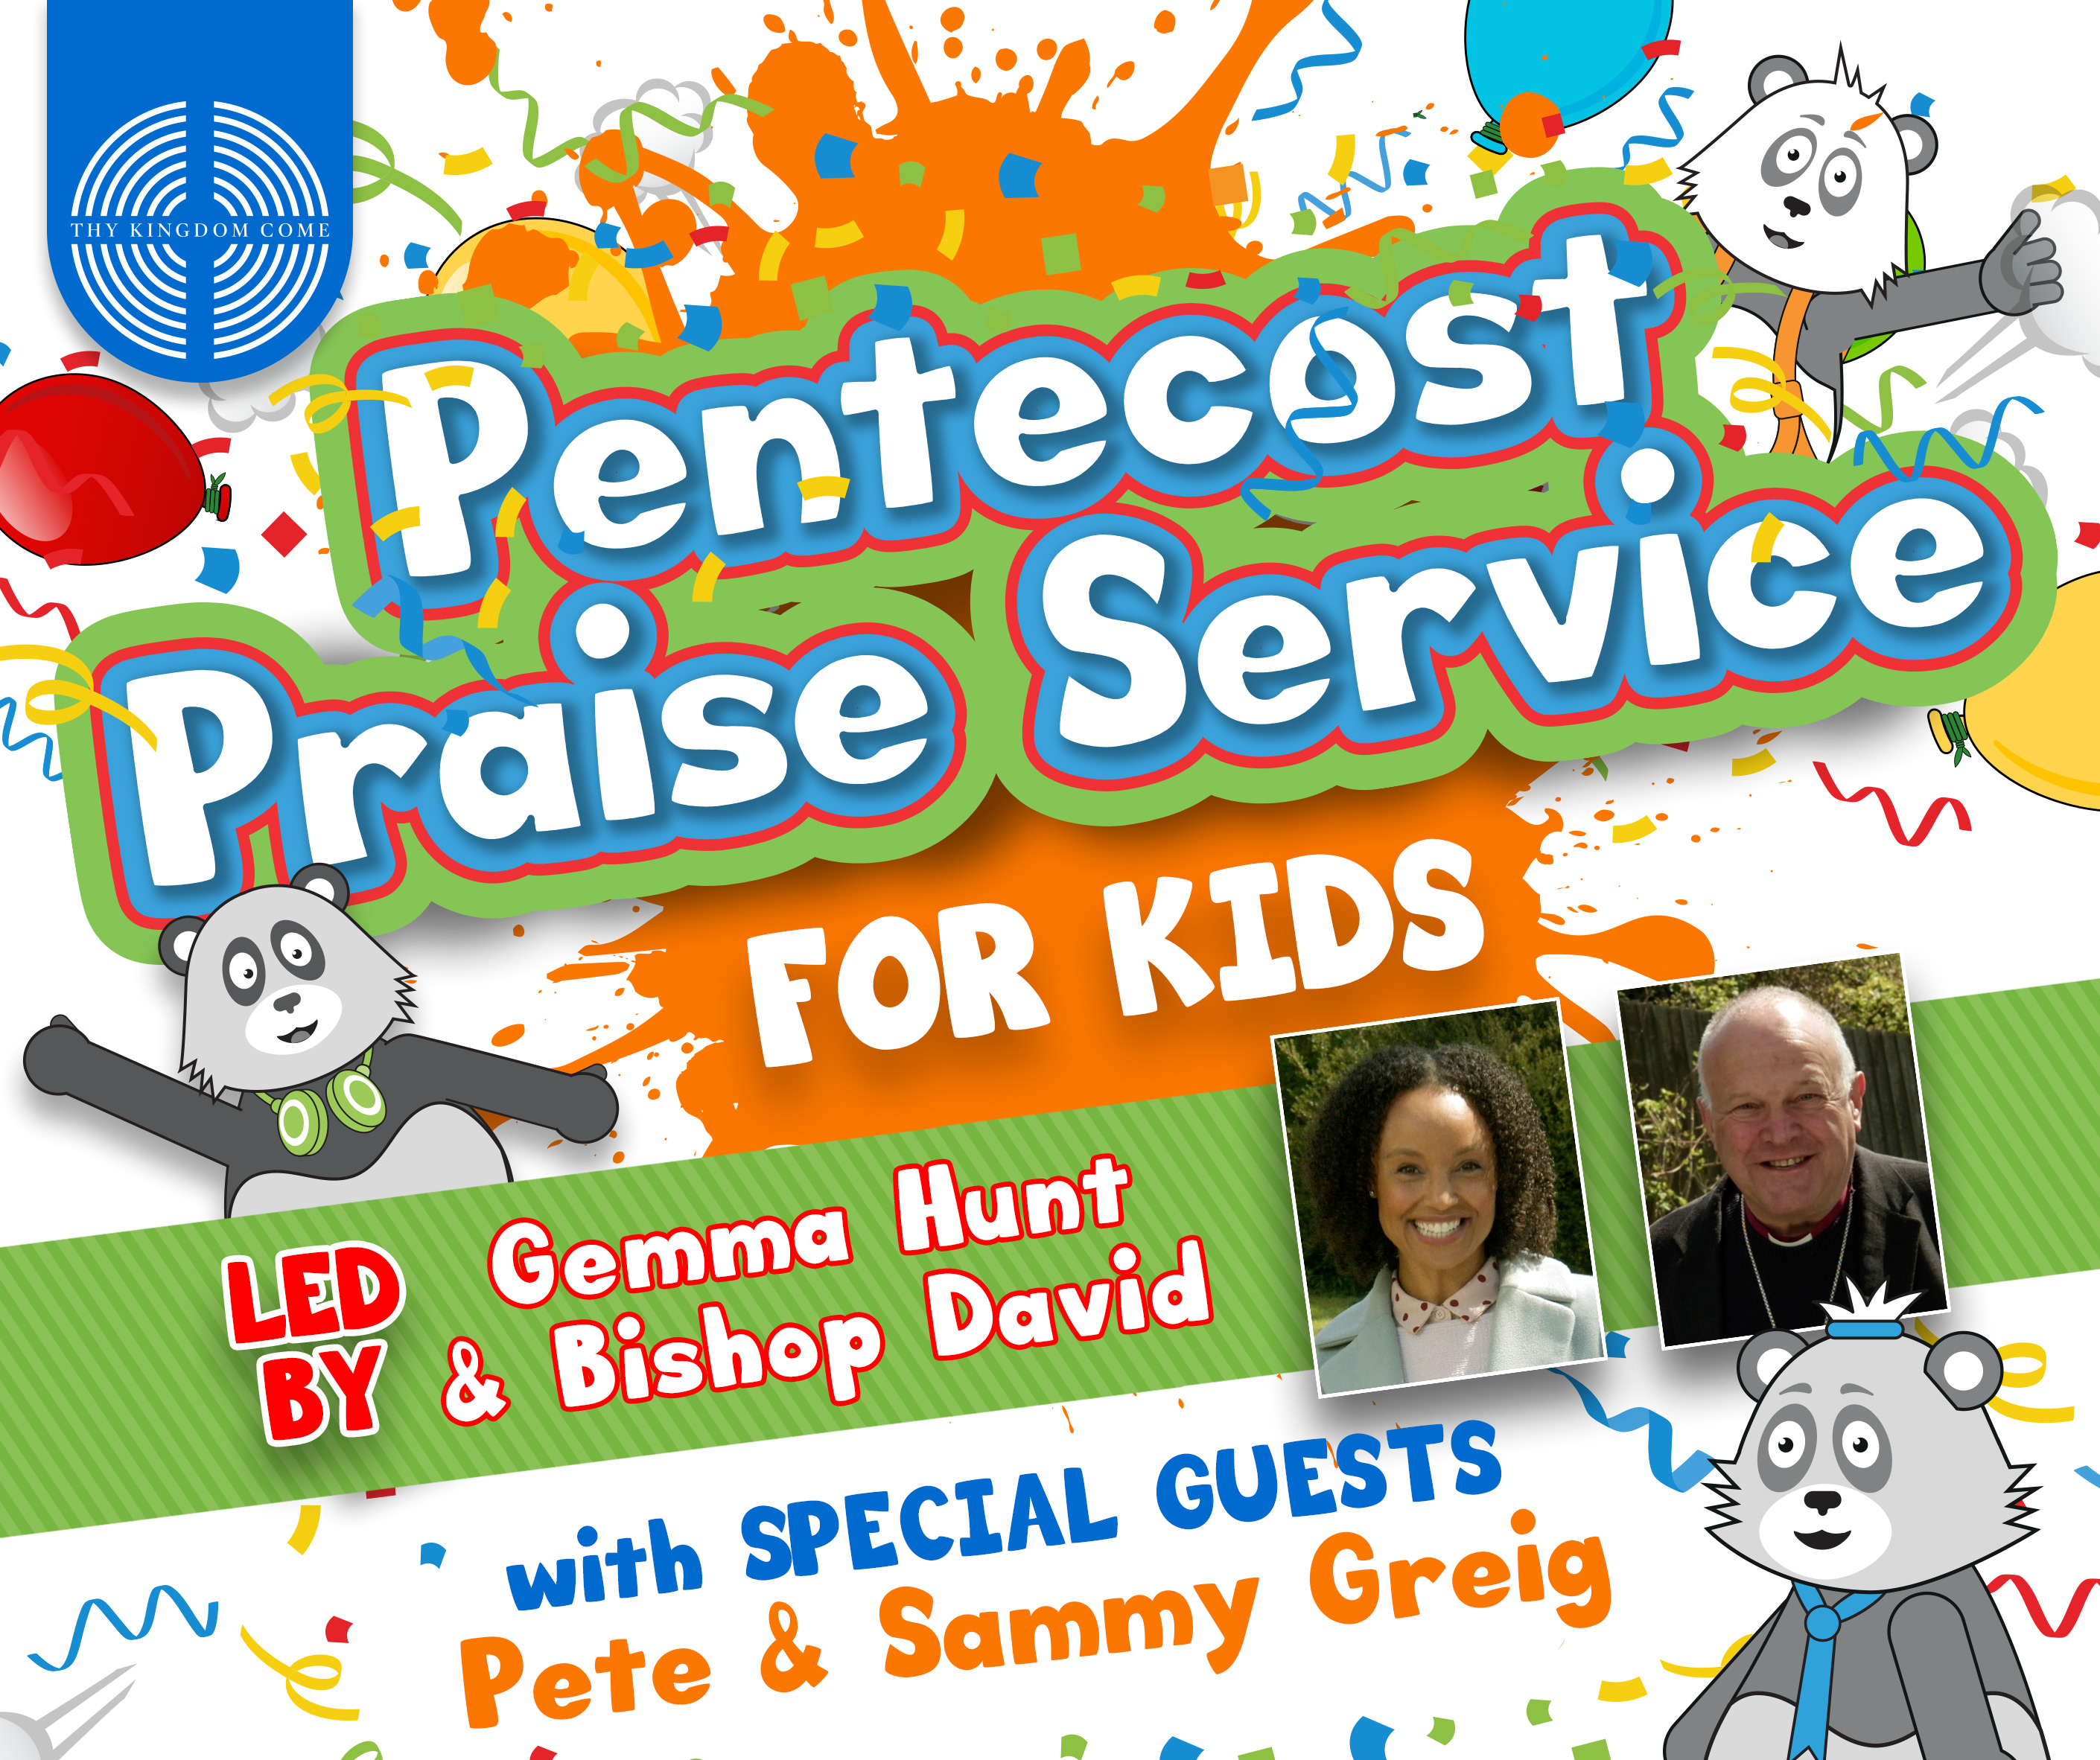 Pentecost Praise Service